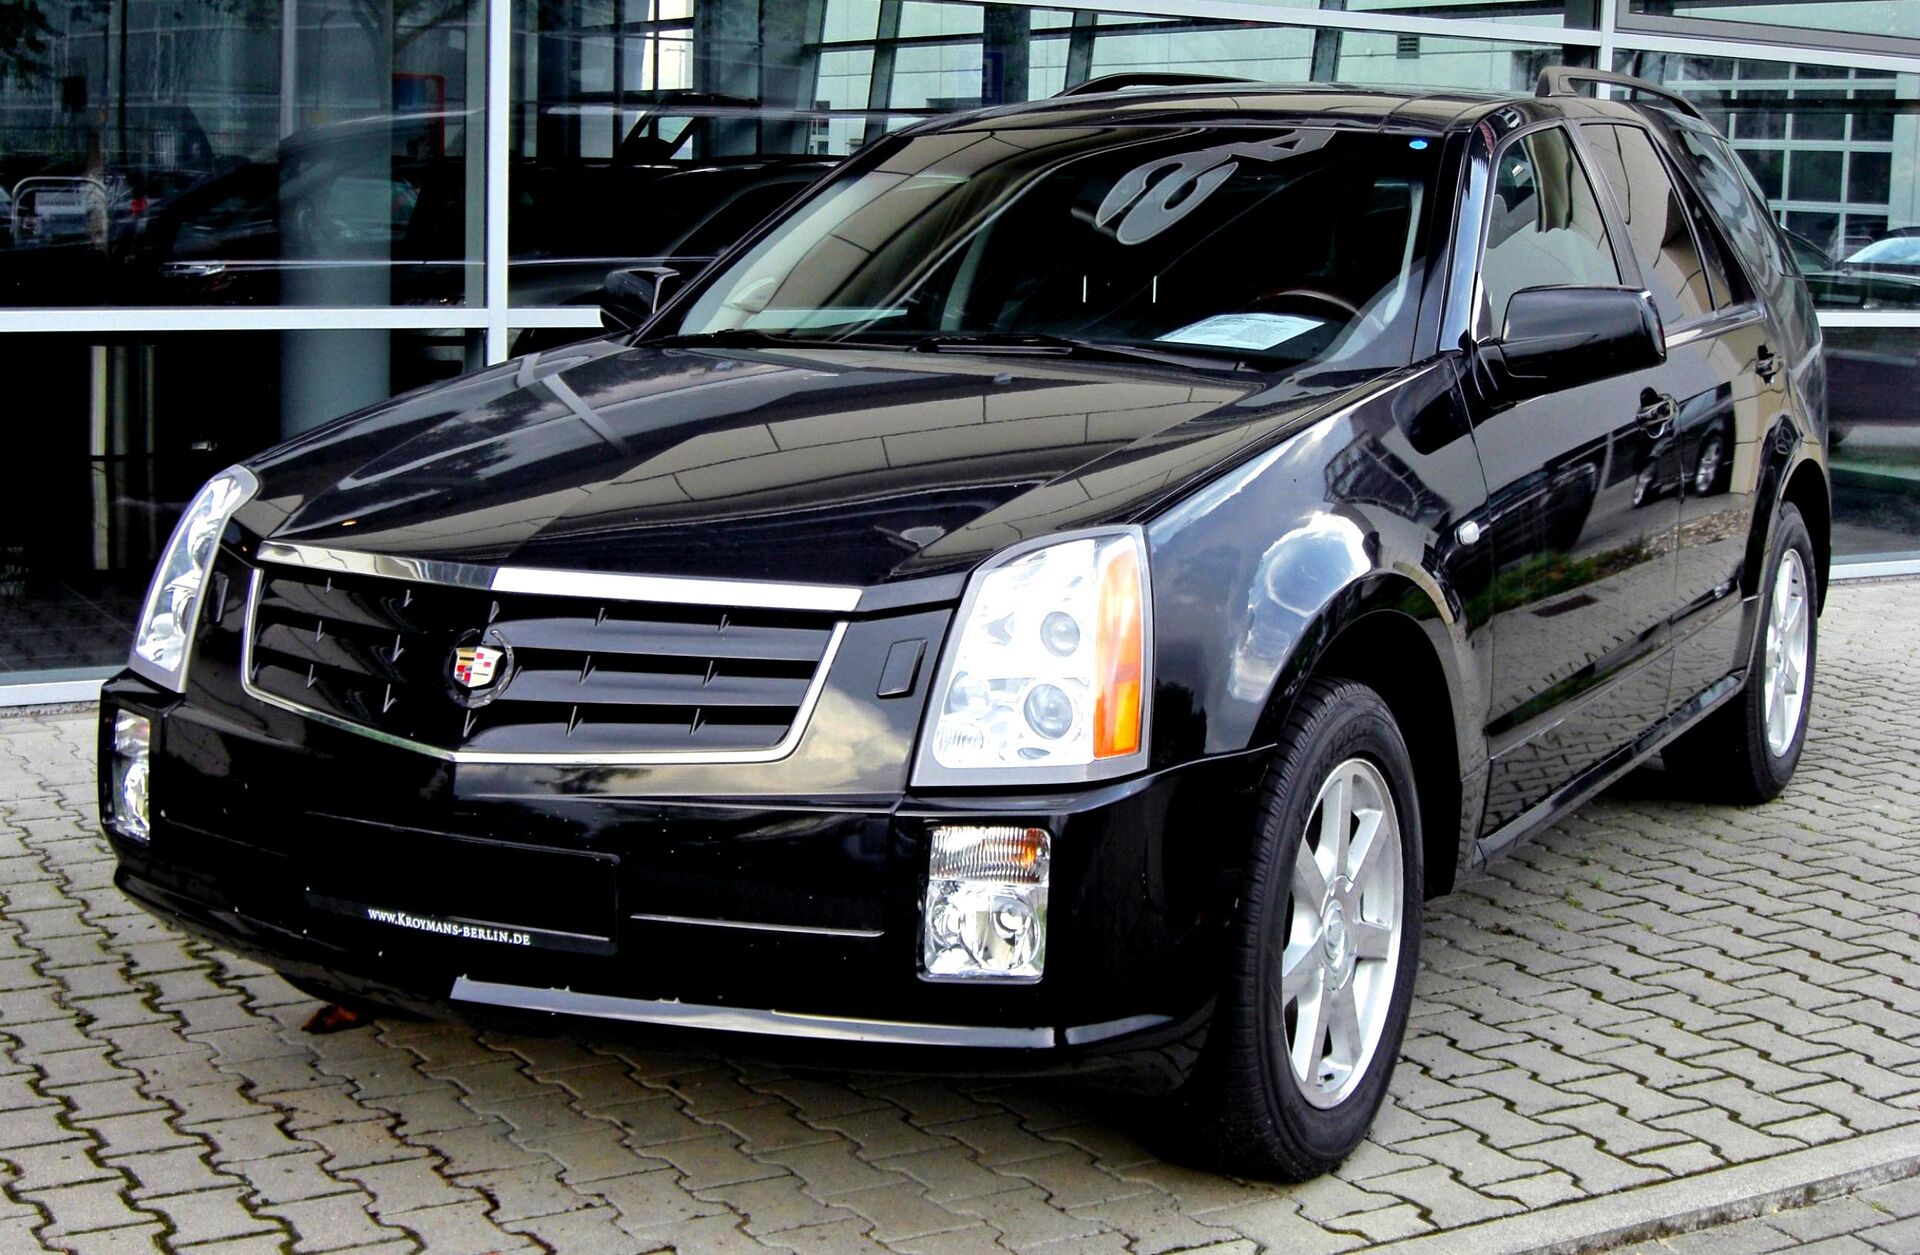 Cadillac SRX 2003 - 2009 Specs and Technical Data, Fuel Consumption